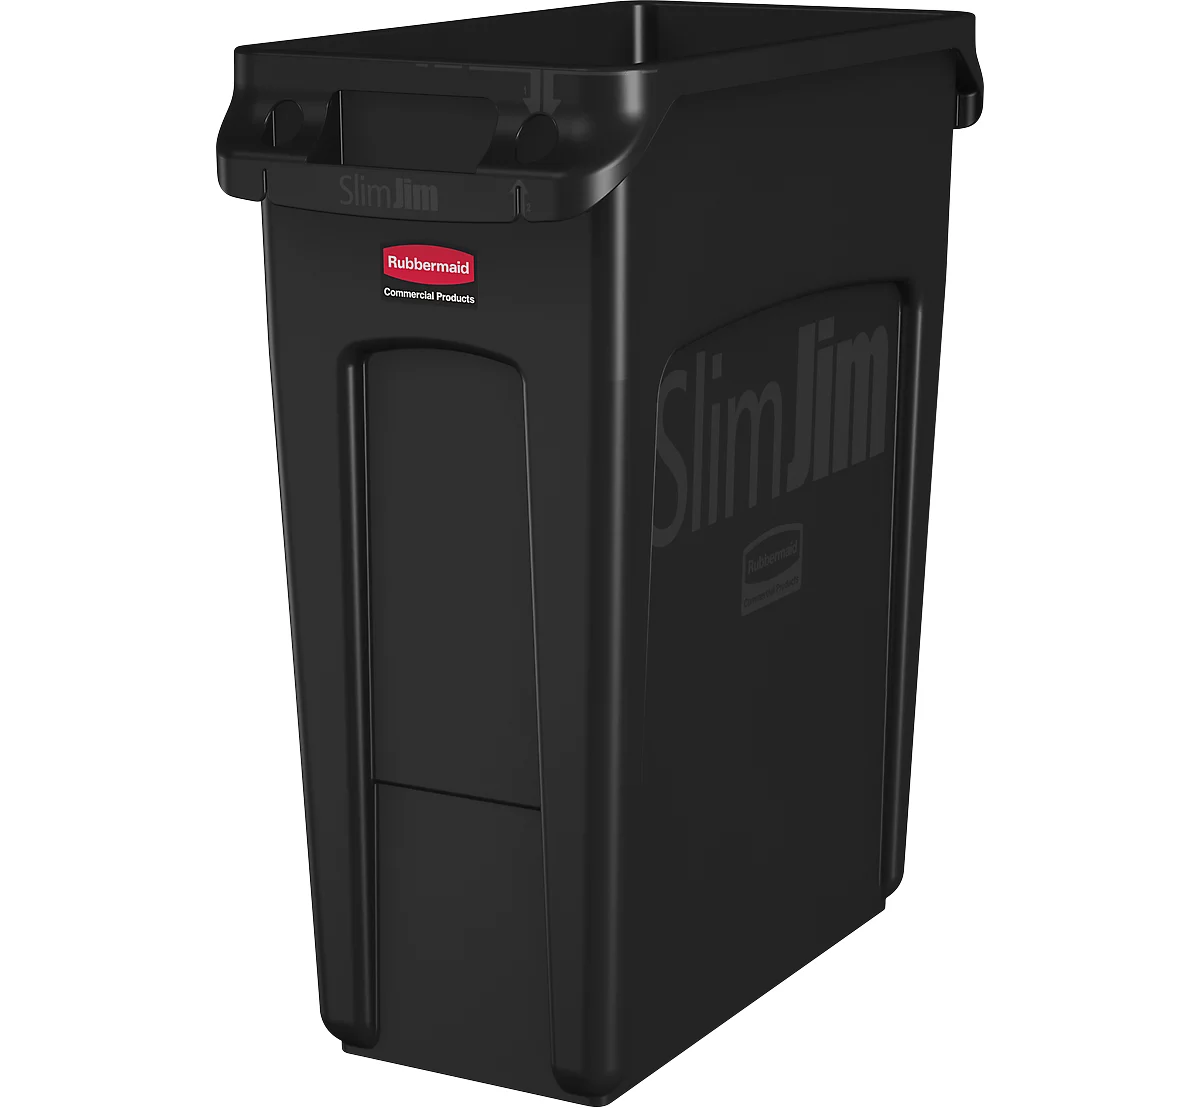 Afvalbak Slim Jim®, kunststof, volume 60 liter, zwart